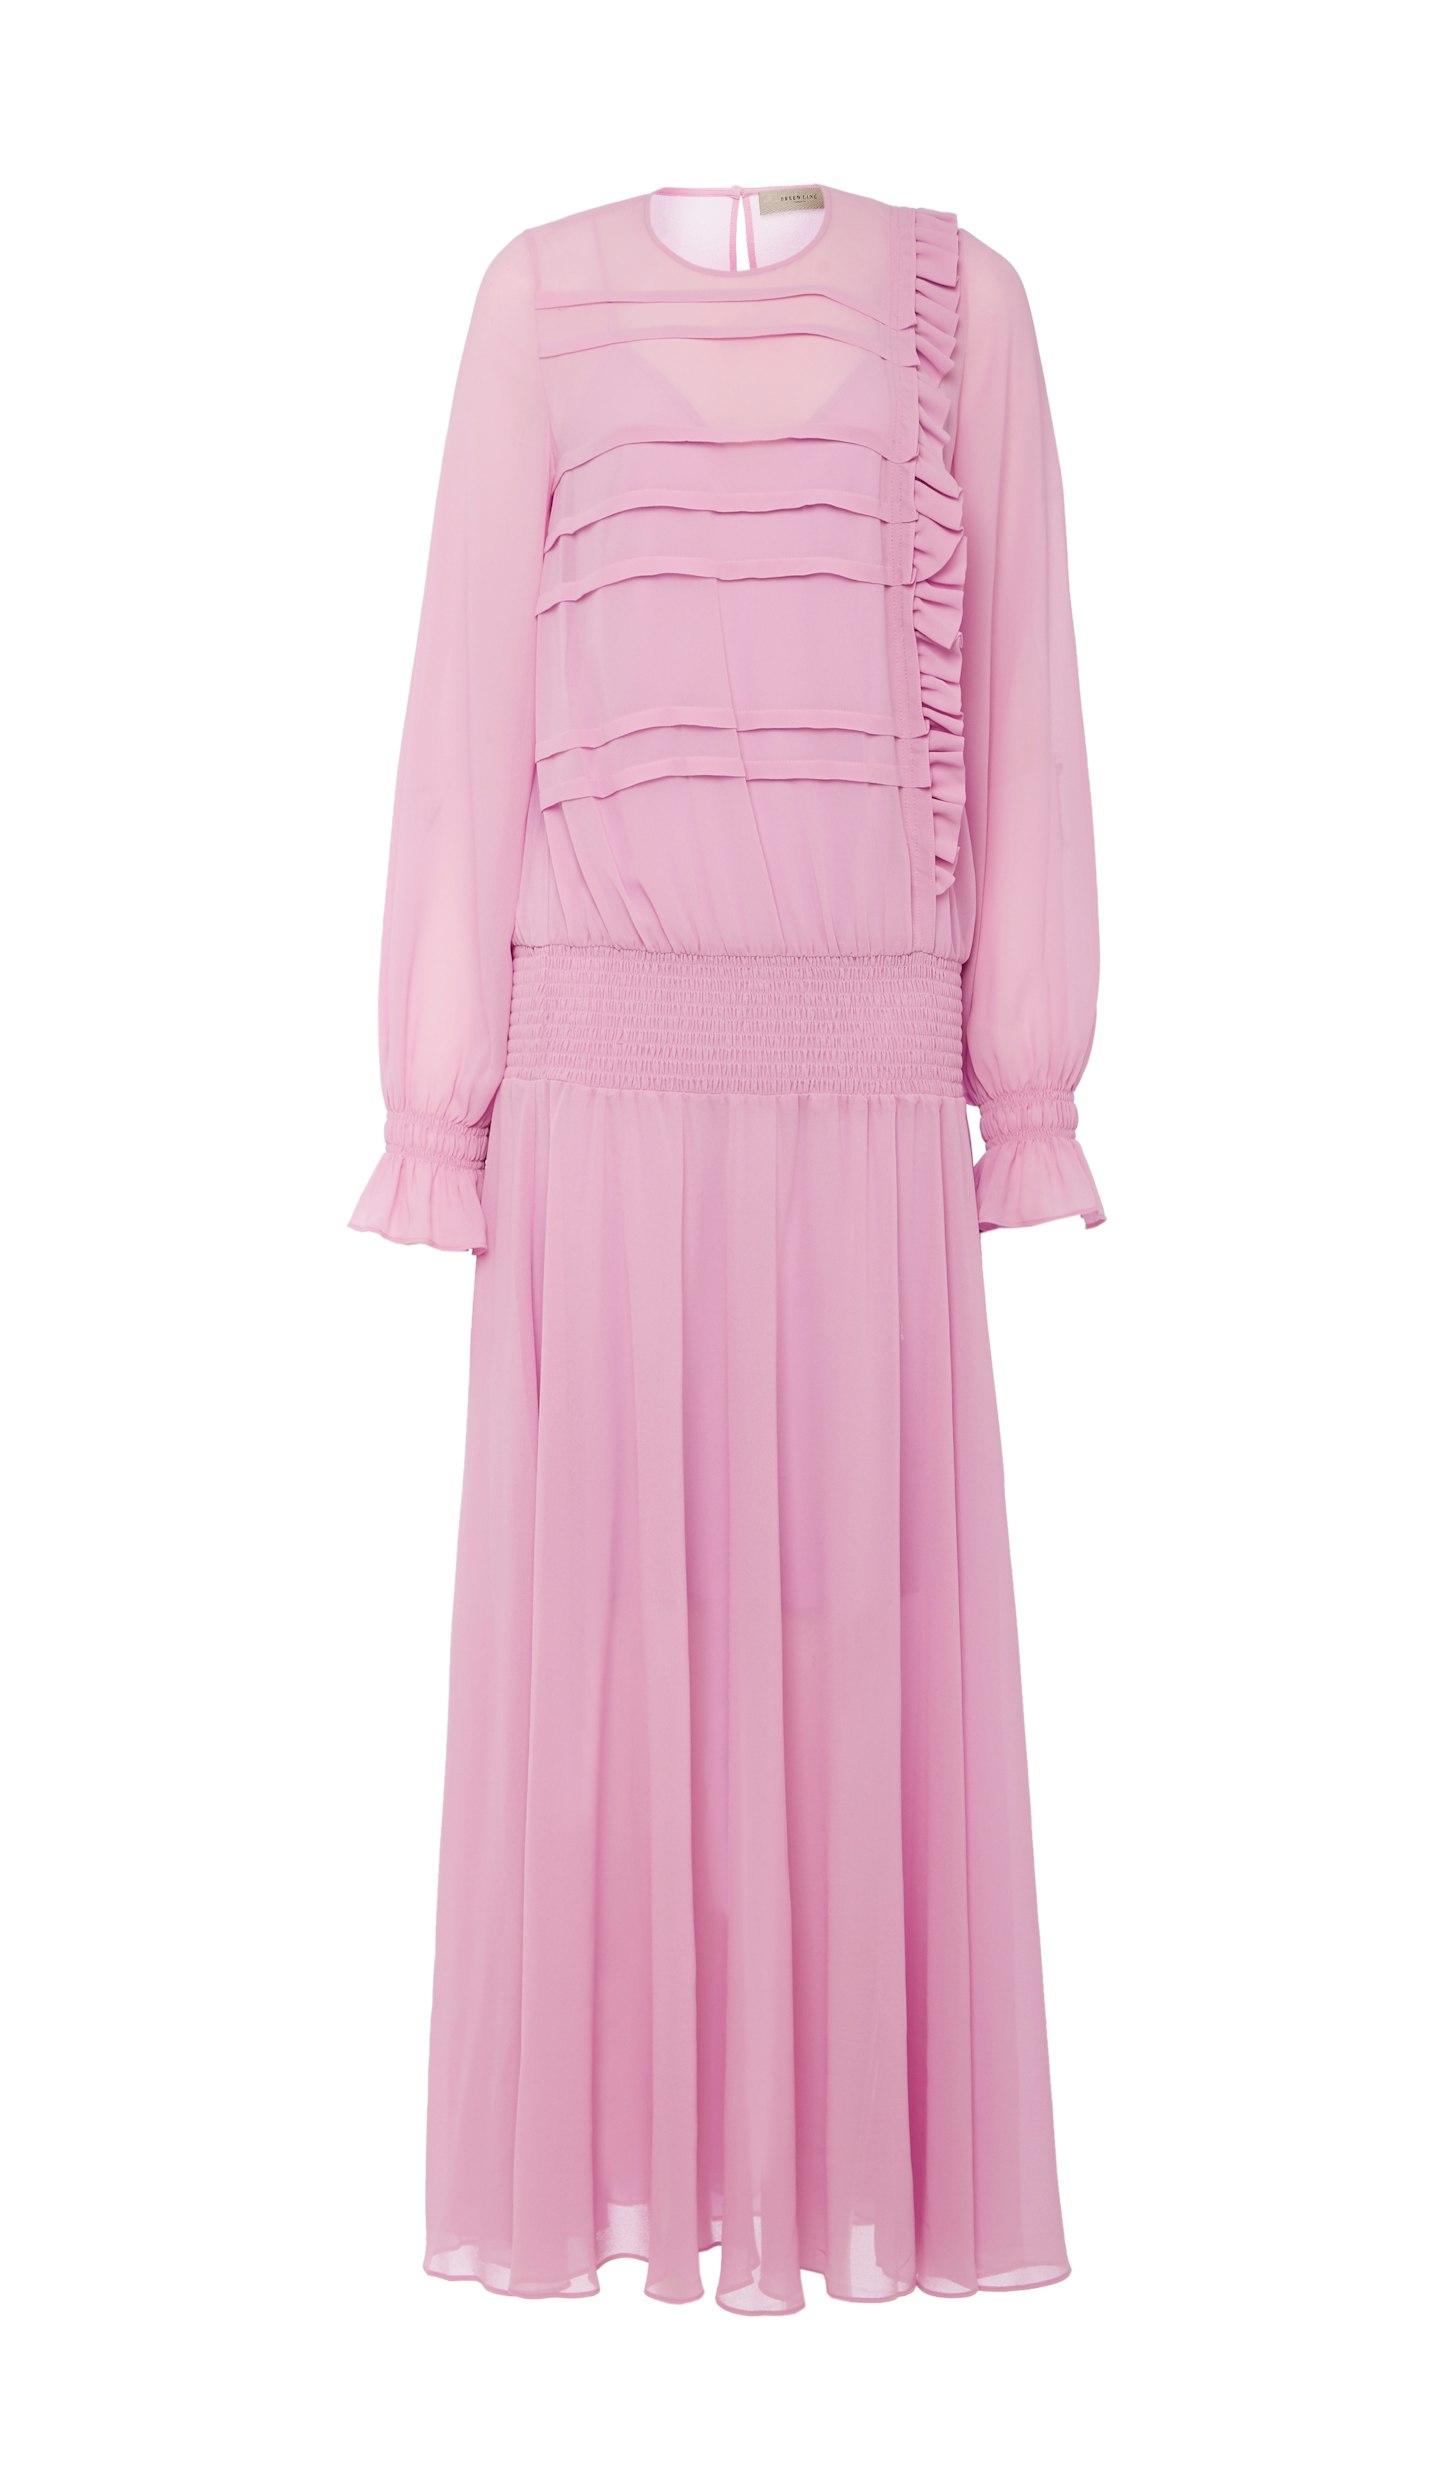 Preen Line, Salome Dress, £210 at Amazon